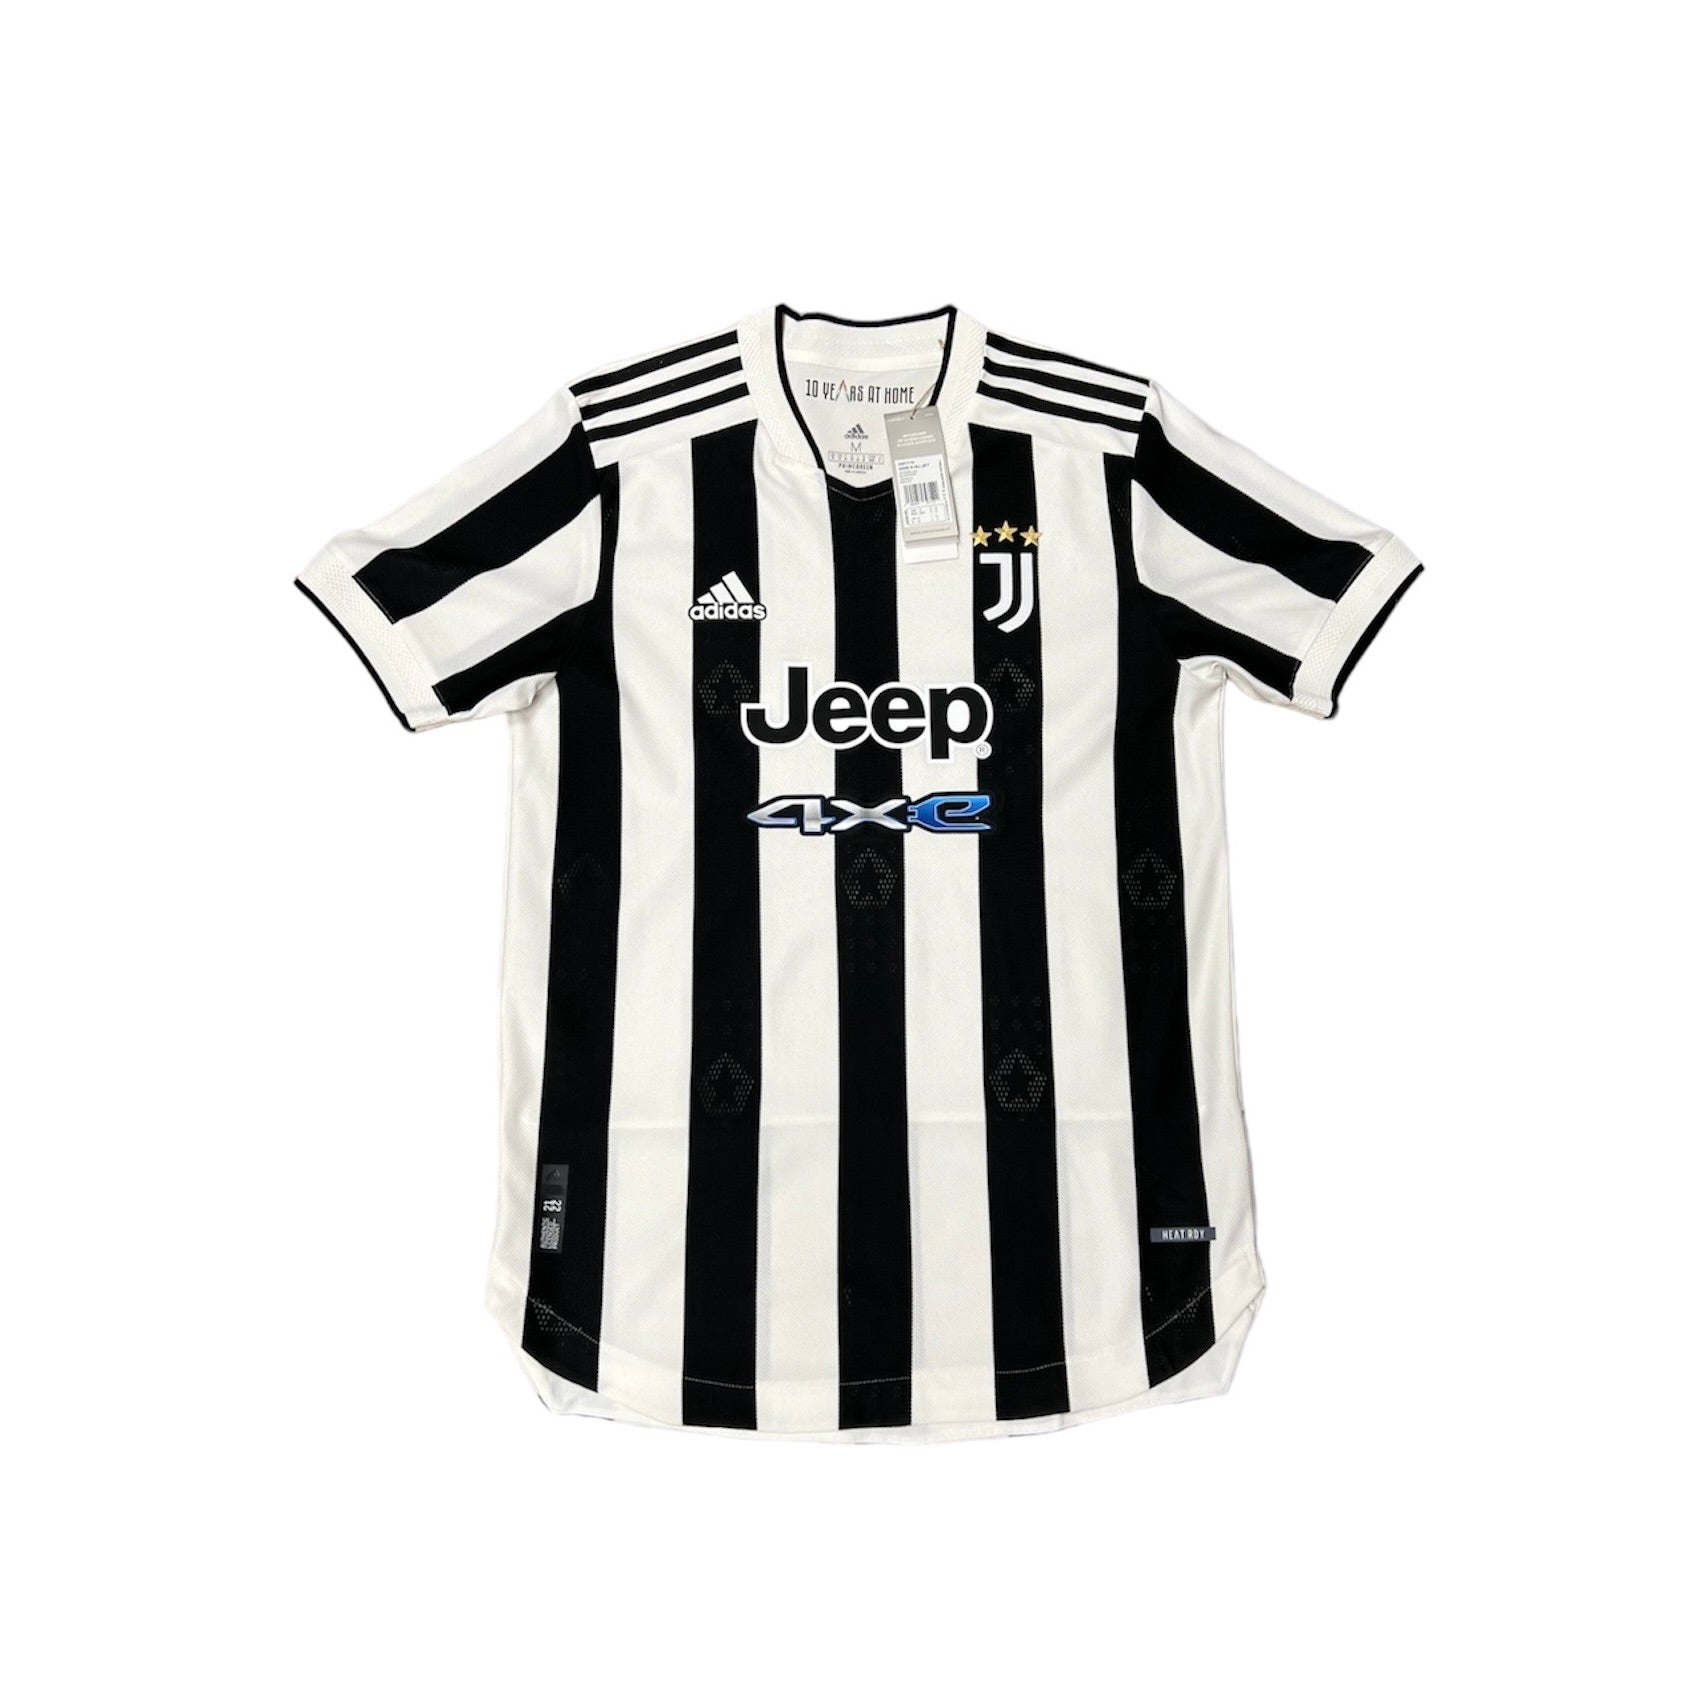 Adidas Juventus 2021/2022 Home Football Jersey